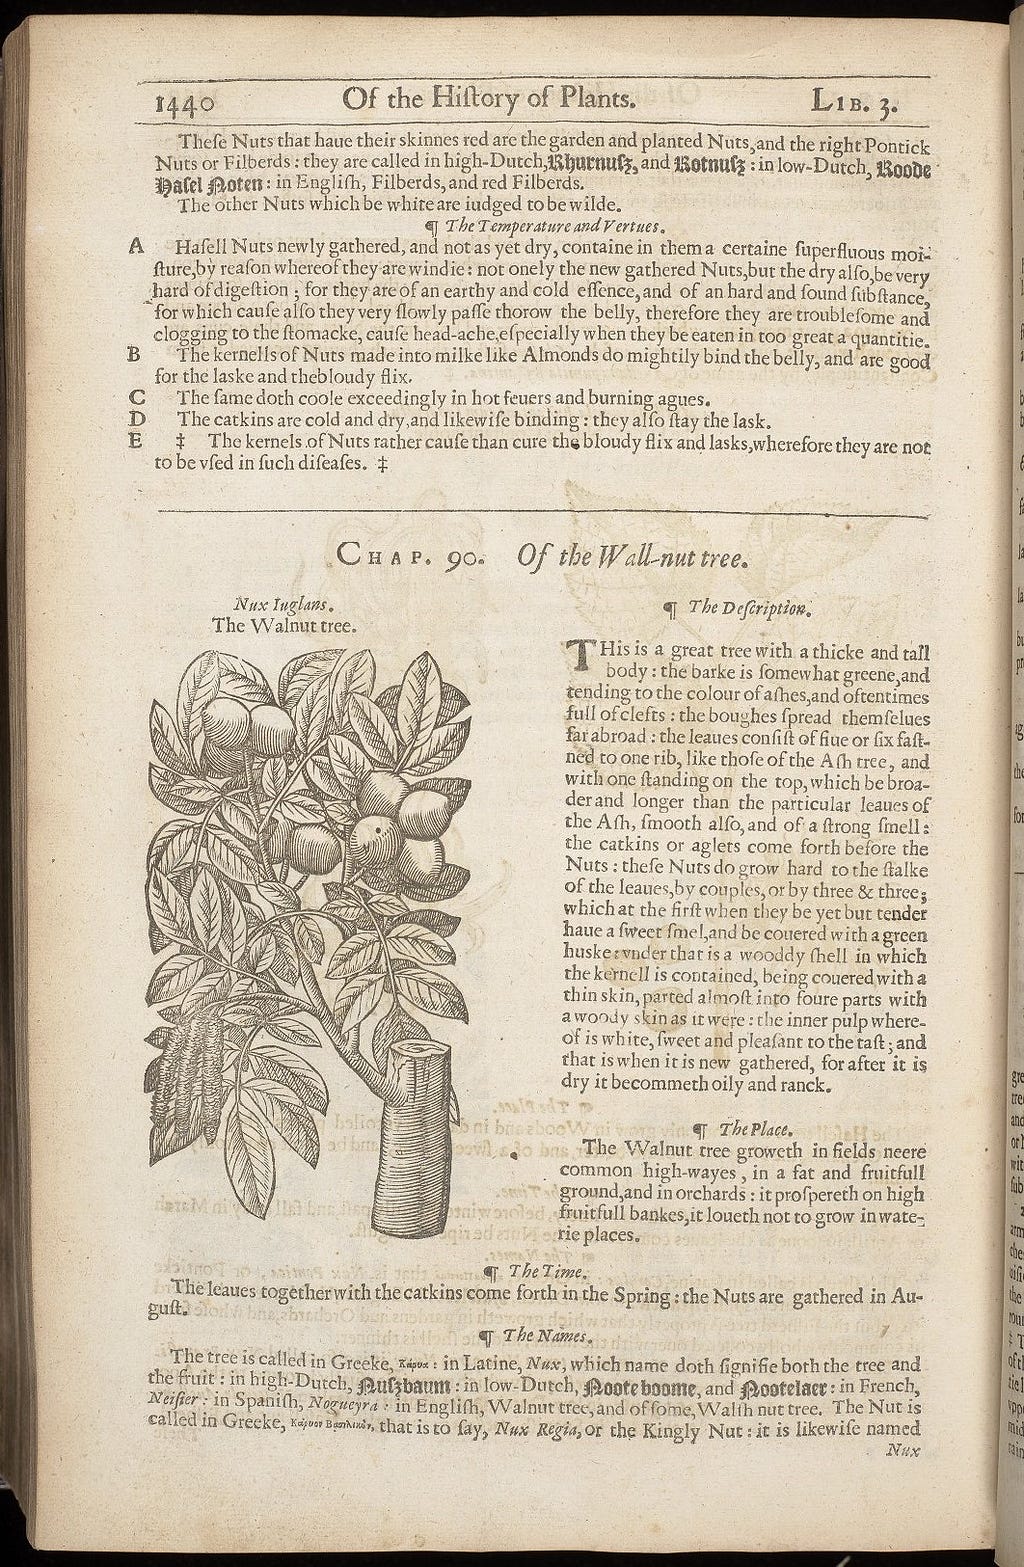 Illustration and description of the walnut tree